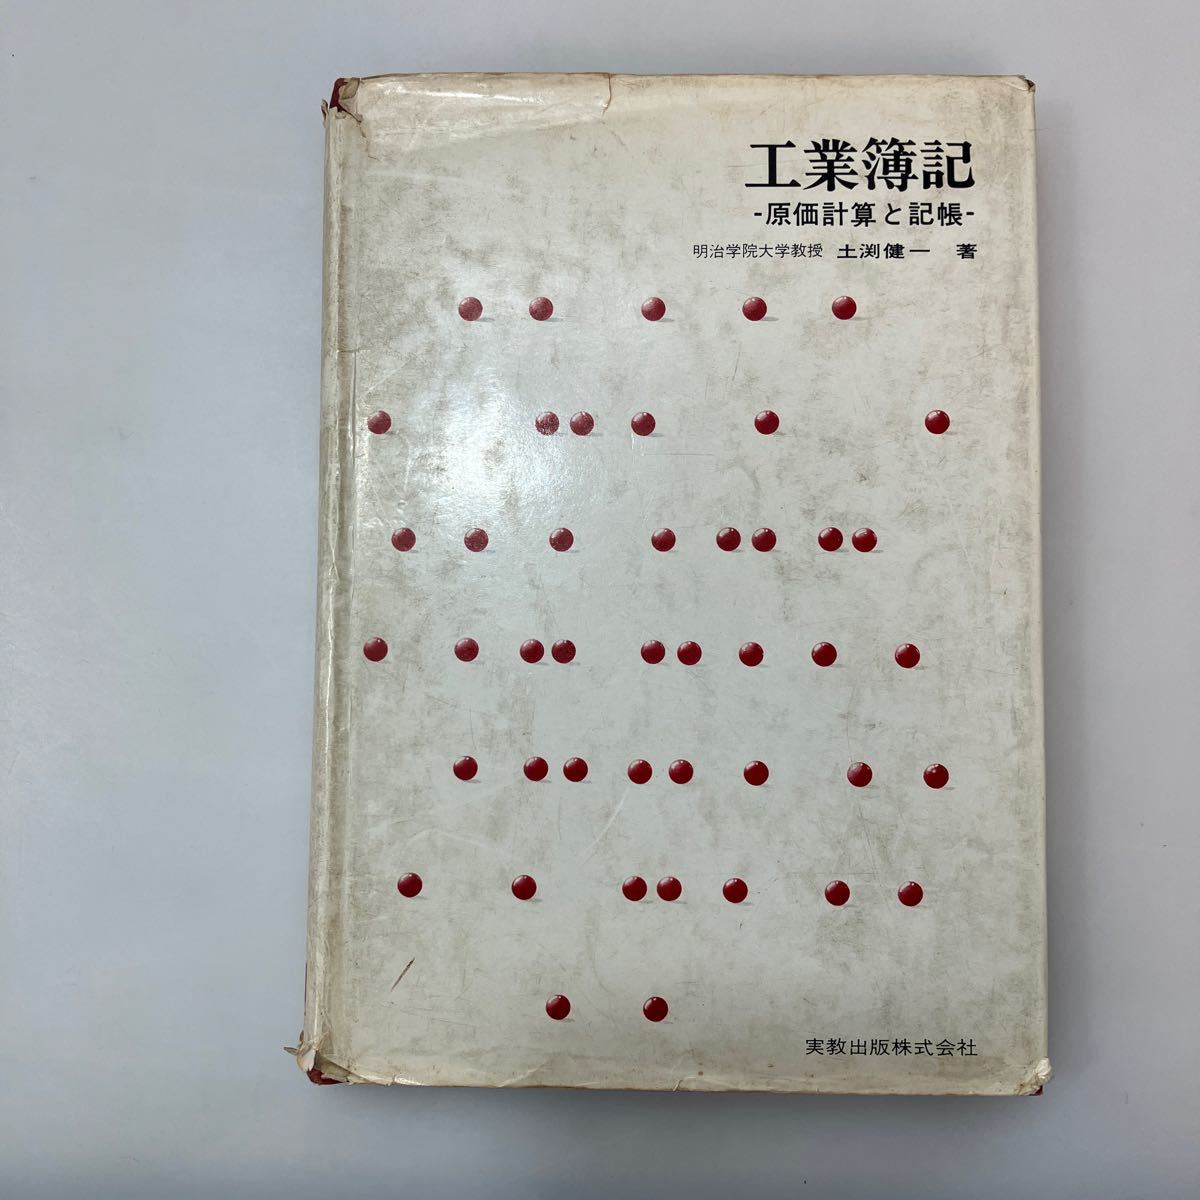 zaa551♪工業簿記―原価計算と記帳 　単行本 土淵健一 (著)　実教出版 (1976/6/10)